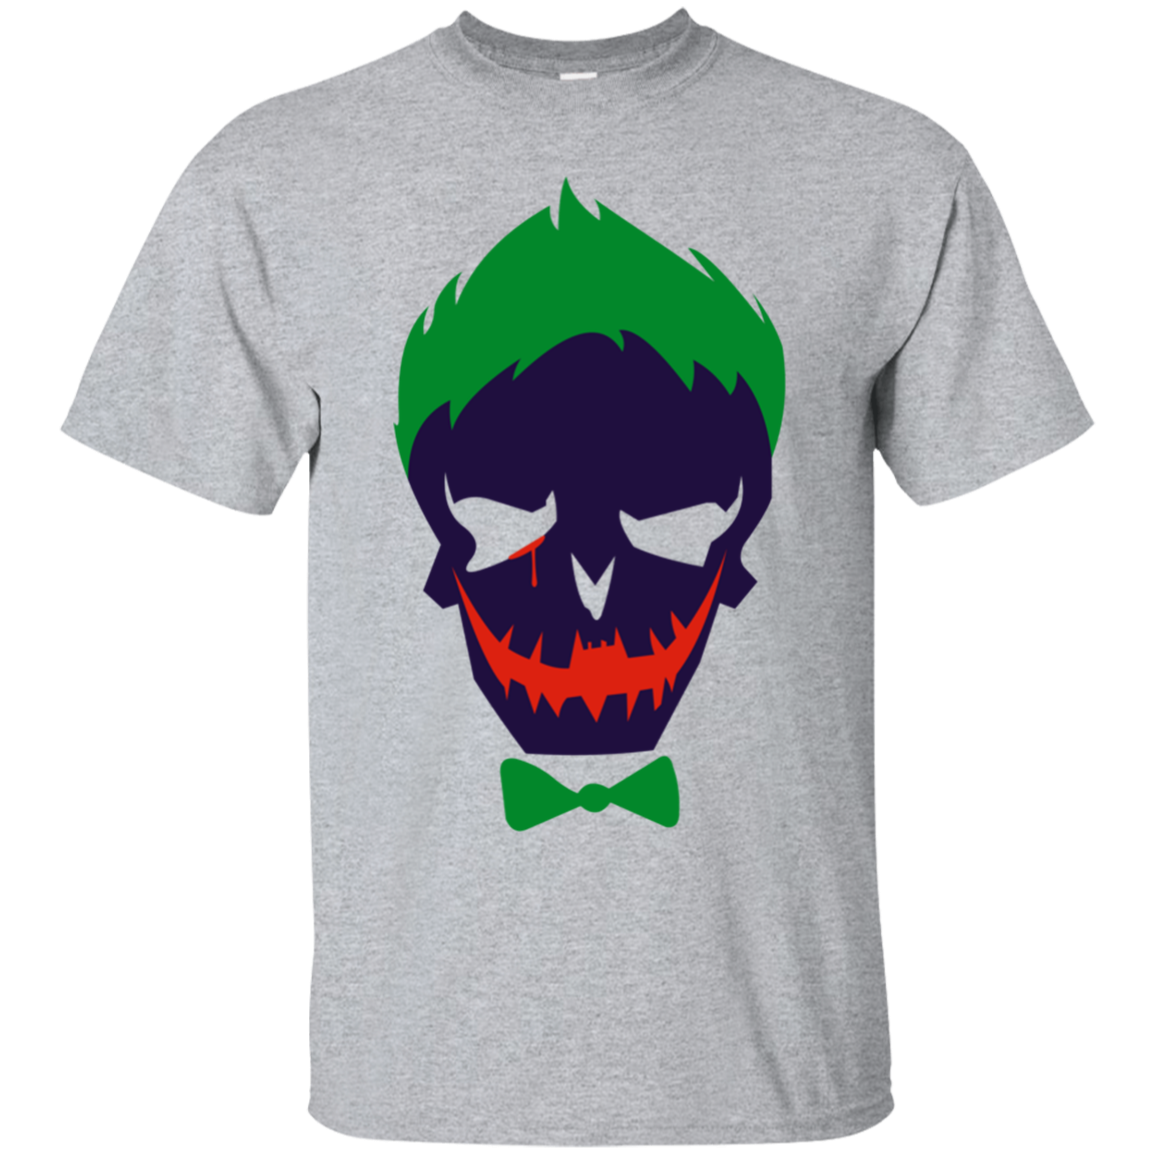 Suicide Squad Joker shirt